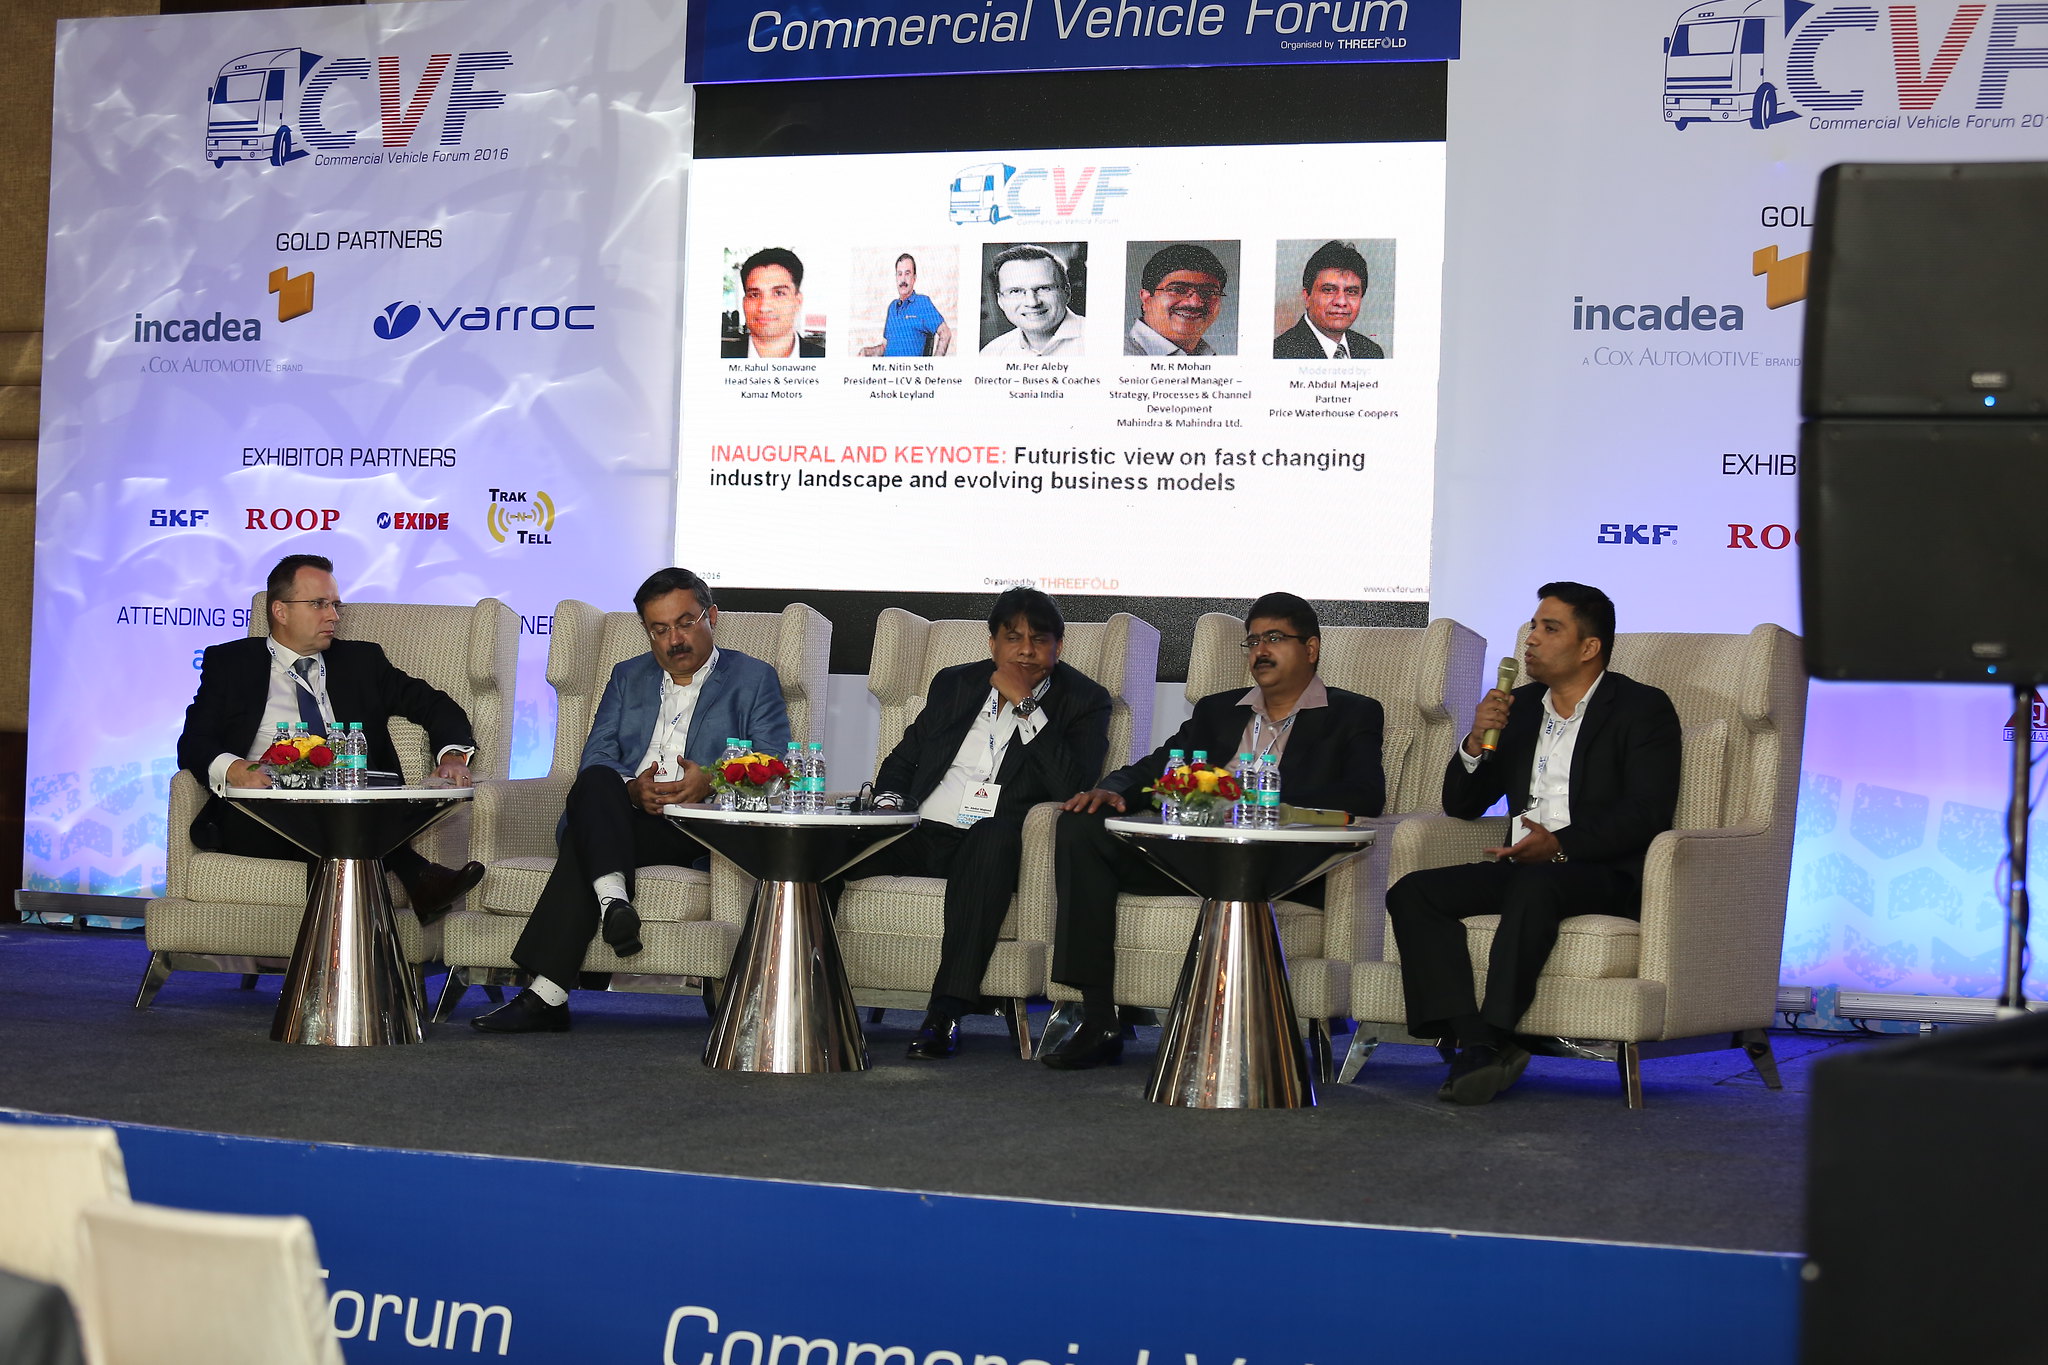 Commercial Vehicle Forum 2016